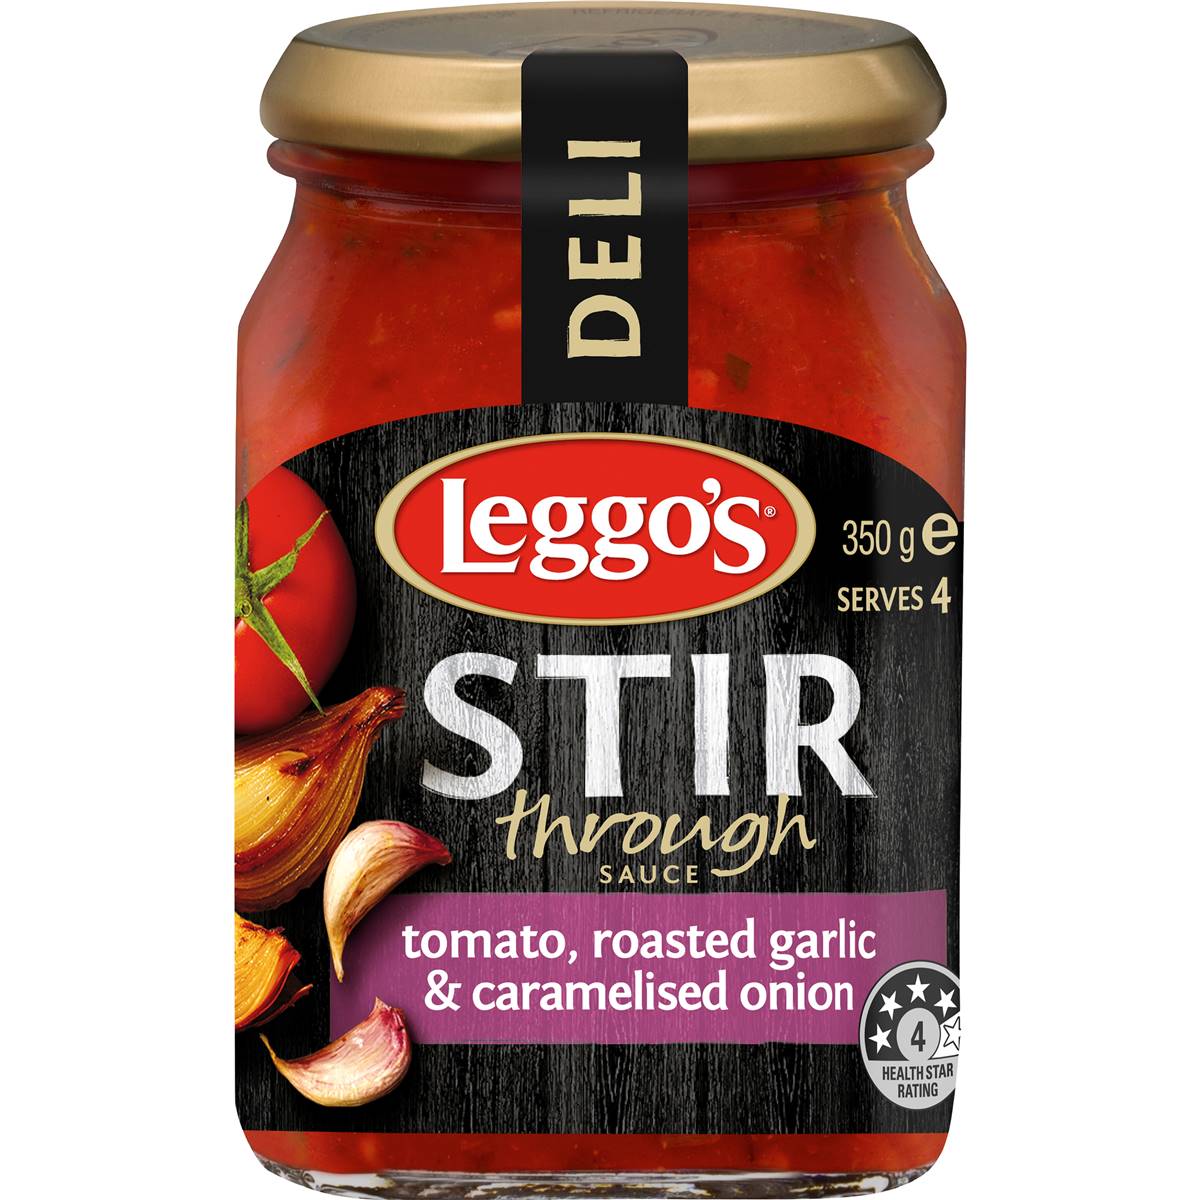 Leggos Stir Through Sauce Tomato Roasted Garlic & Caramelised Onion 350g